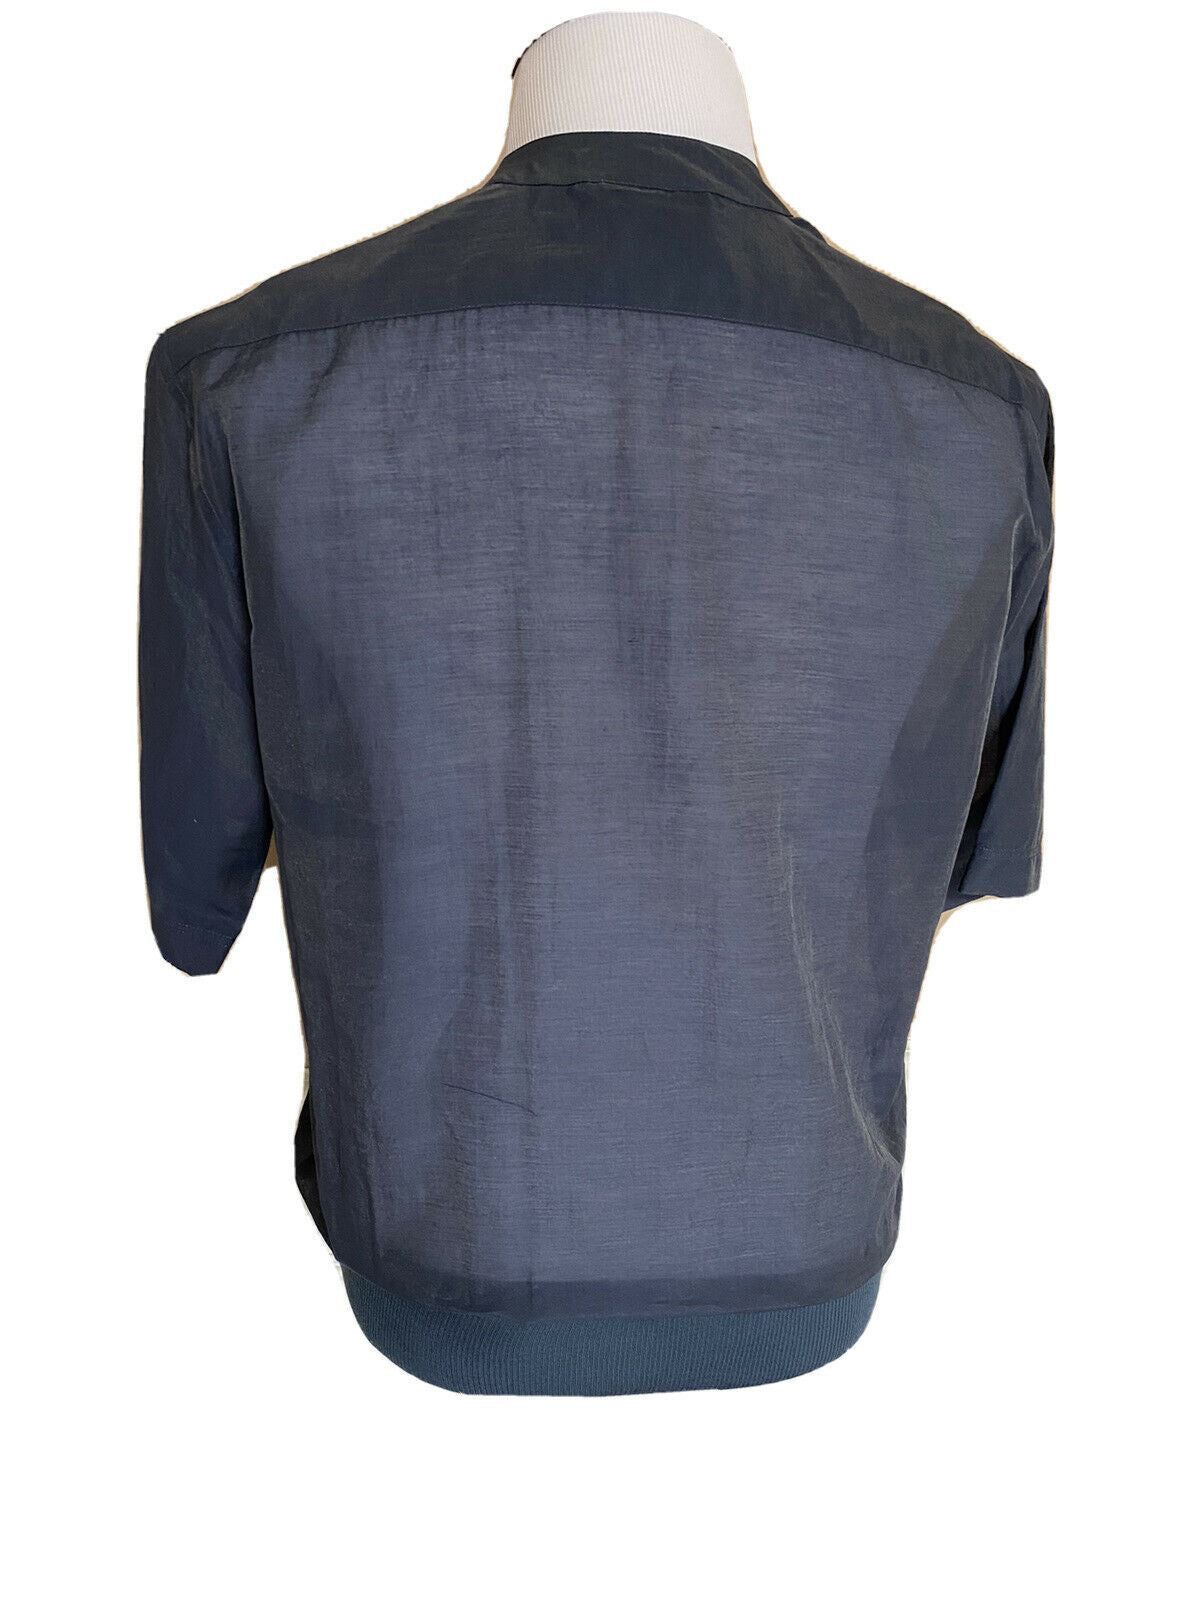 NWT $545 Emporio Armani Modern Синяя рубашка L с коротким рукавом в корейском стиле 21CF7T 